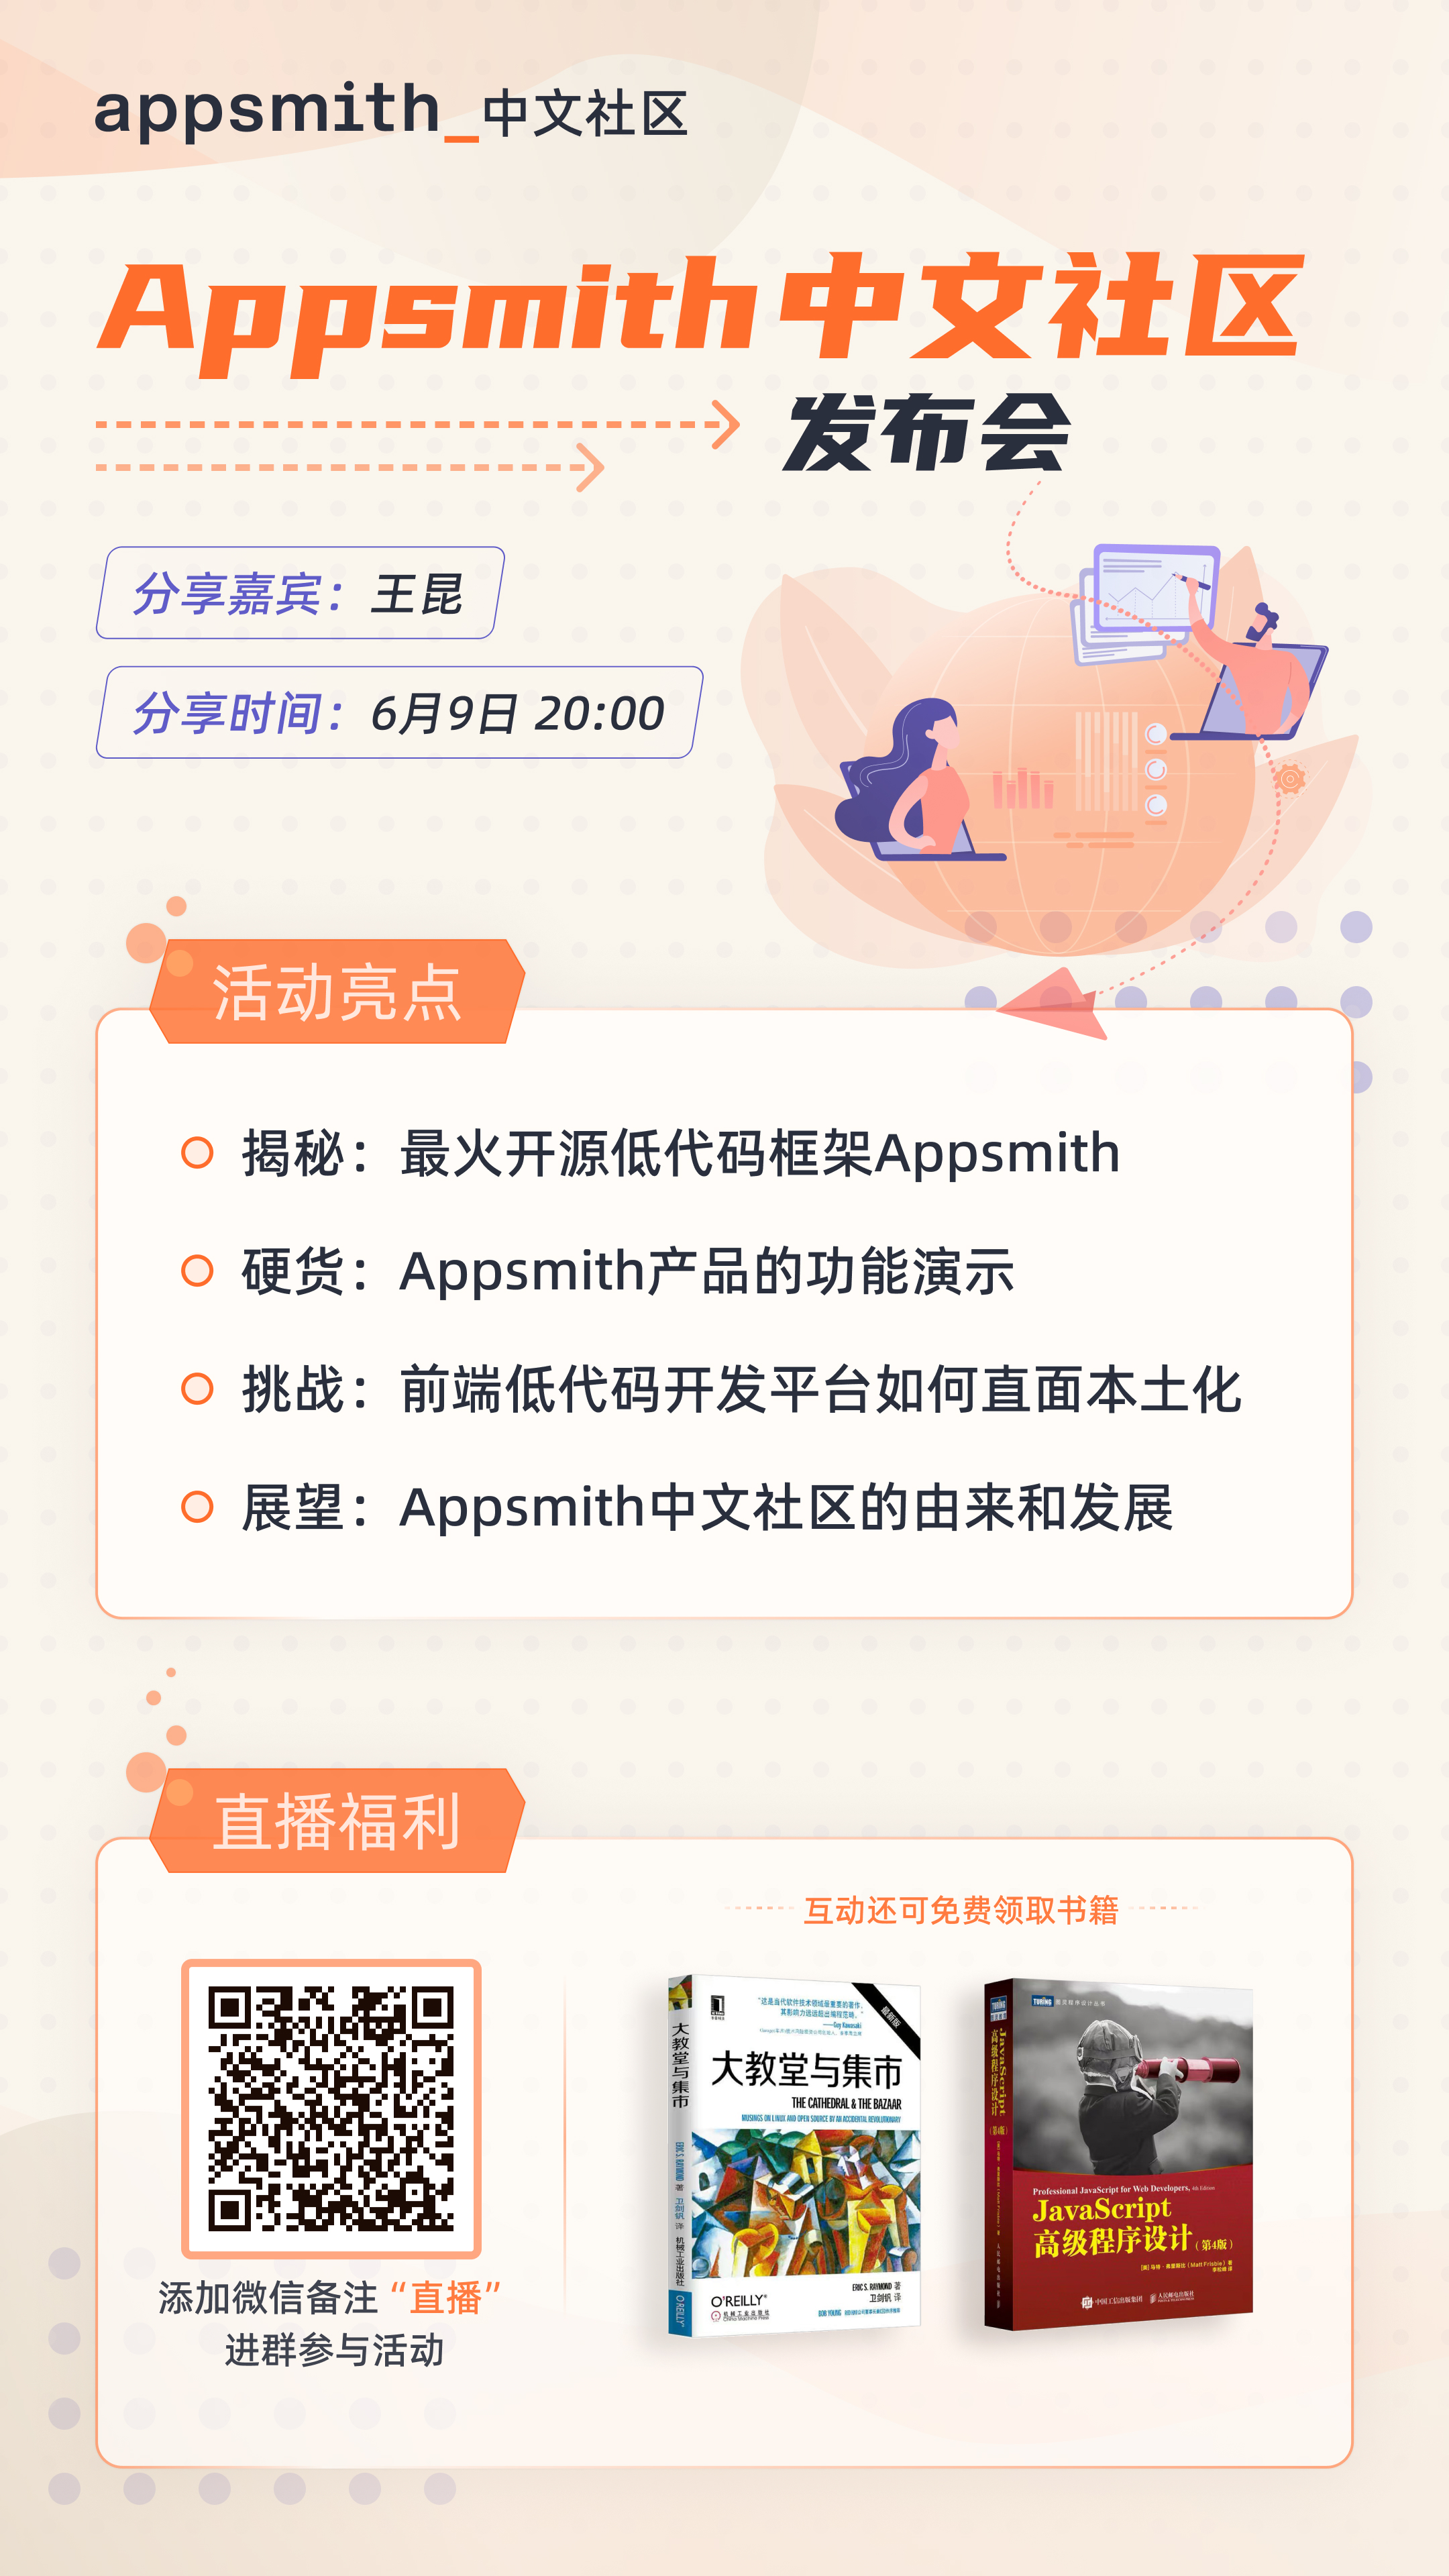 Appsmith 中文社区